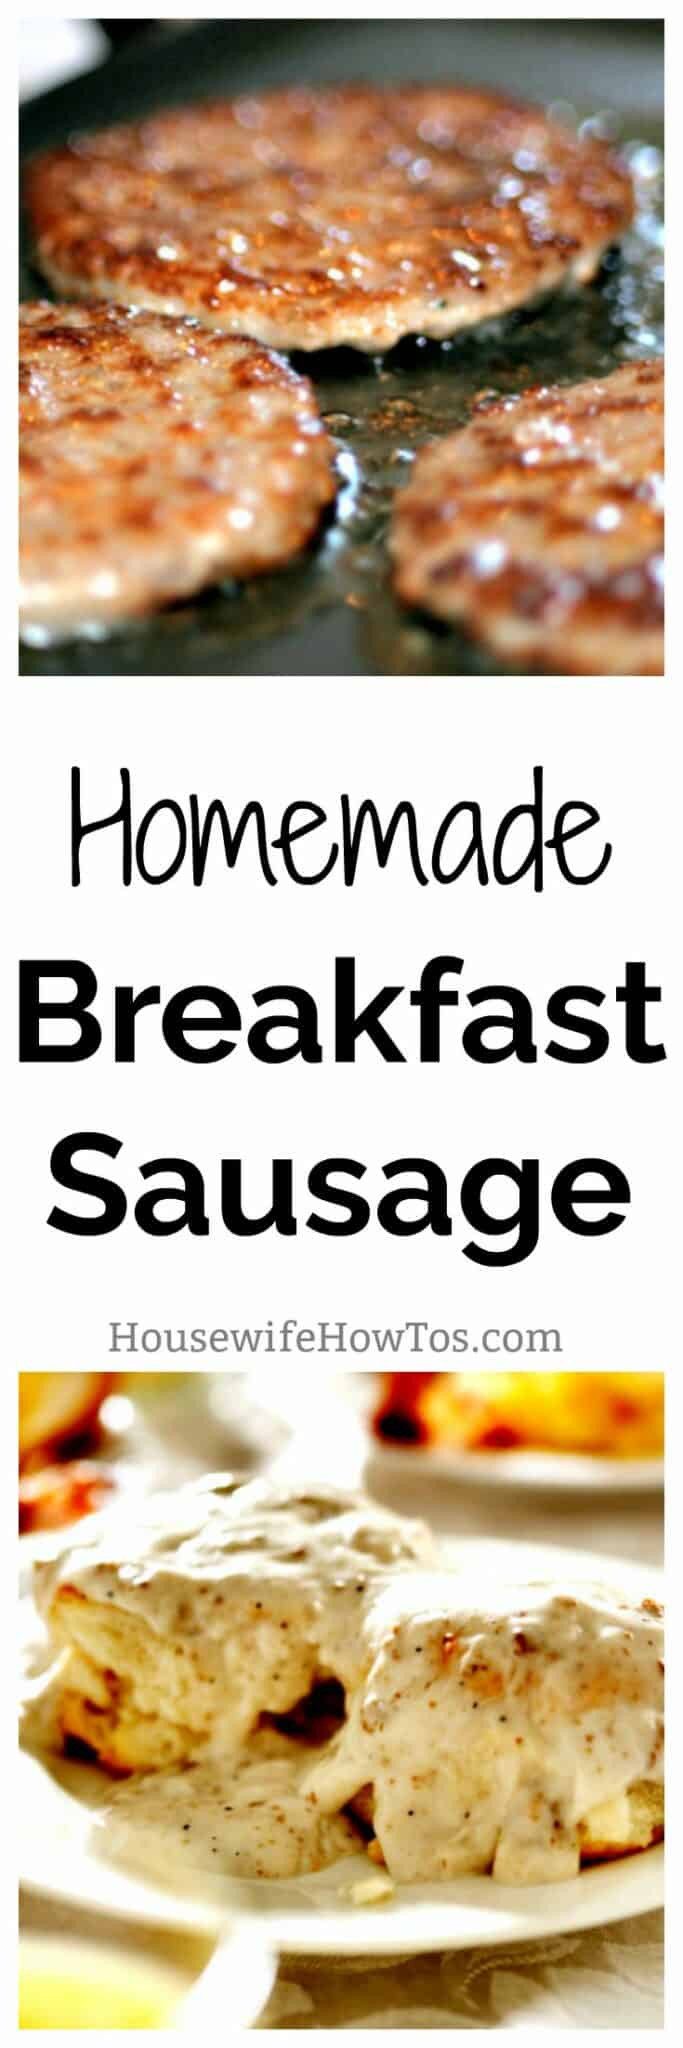 Recipes Using Breakfast Sausage
 Homemade Breakfast Sausage Recipe No special equipment